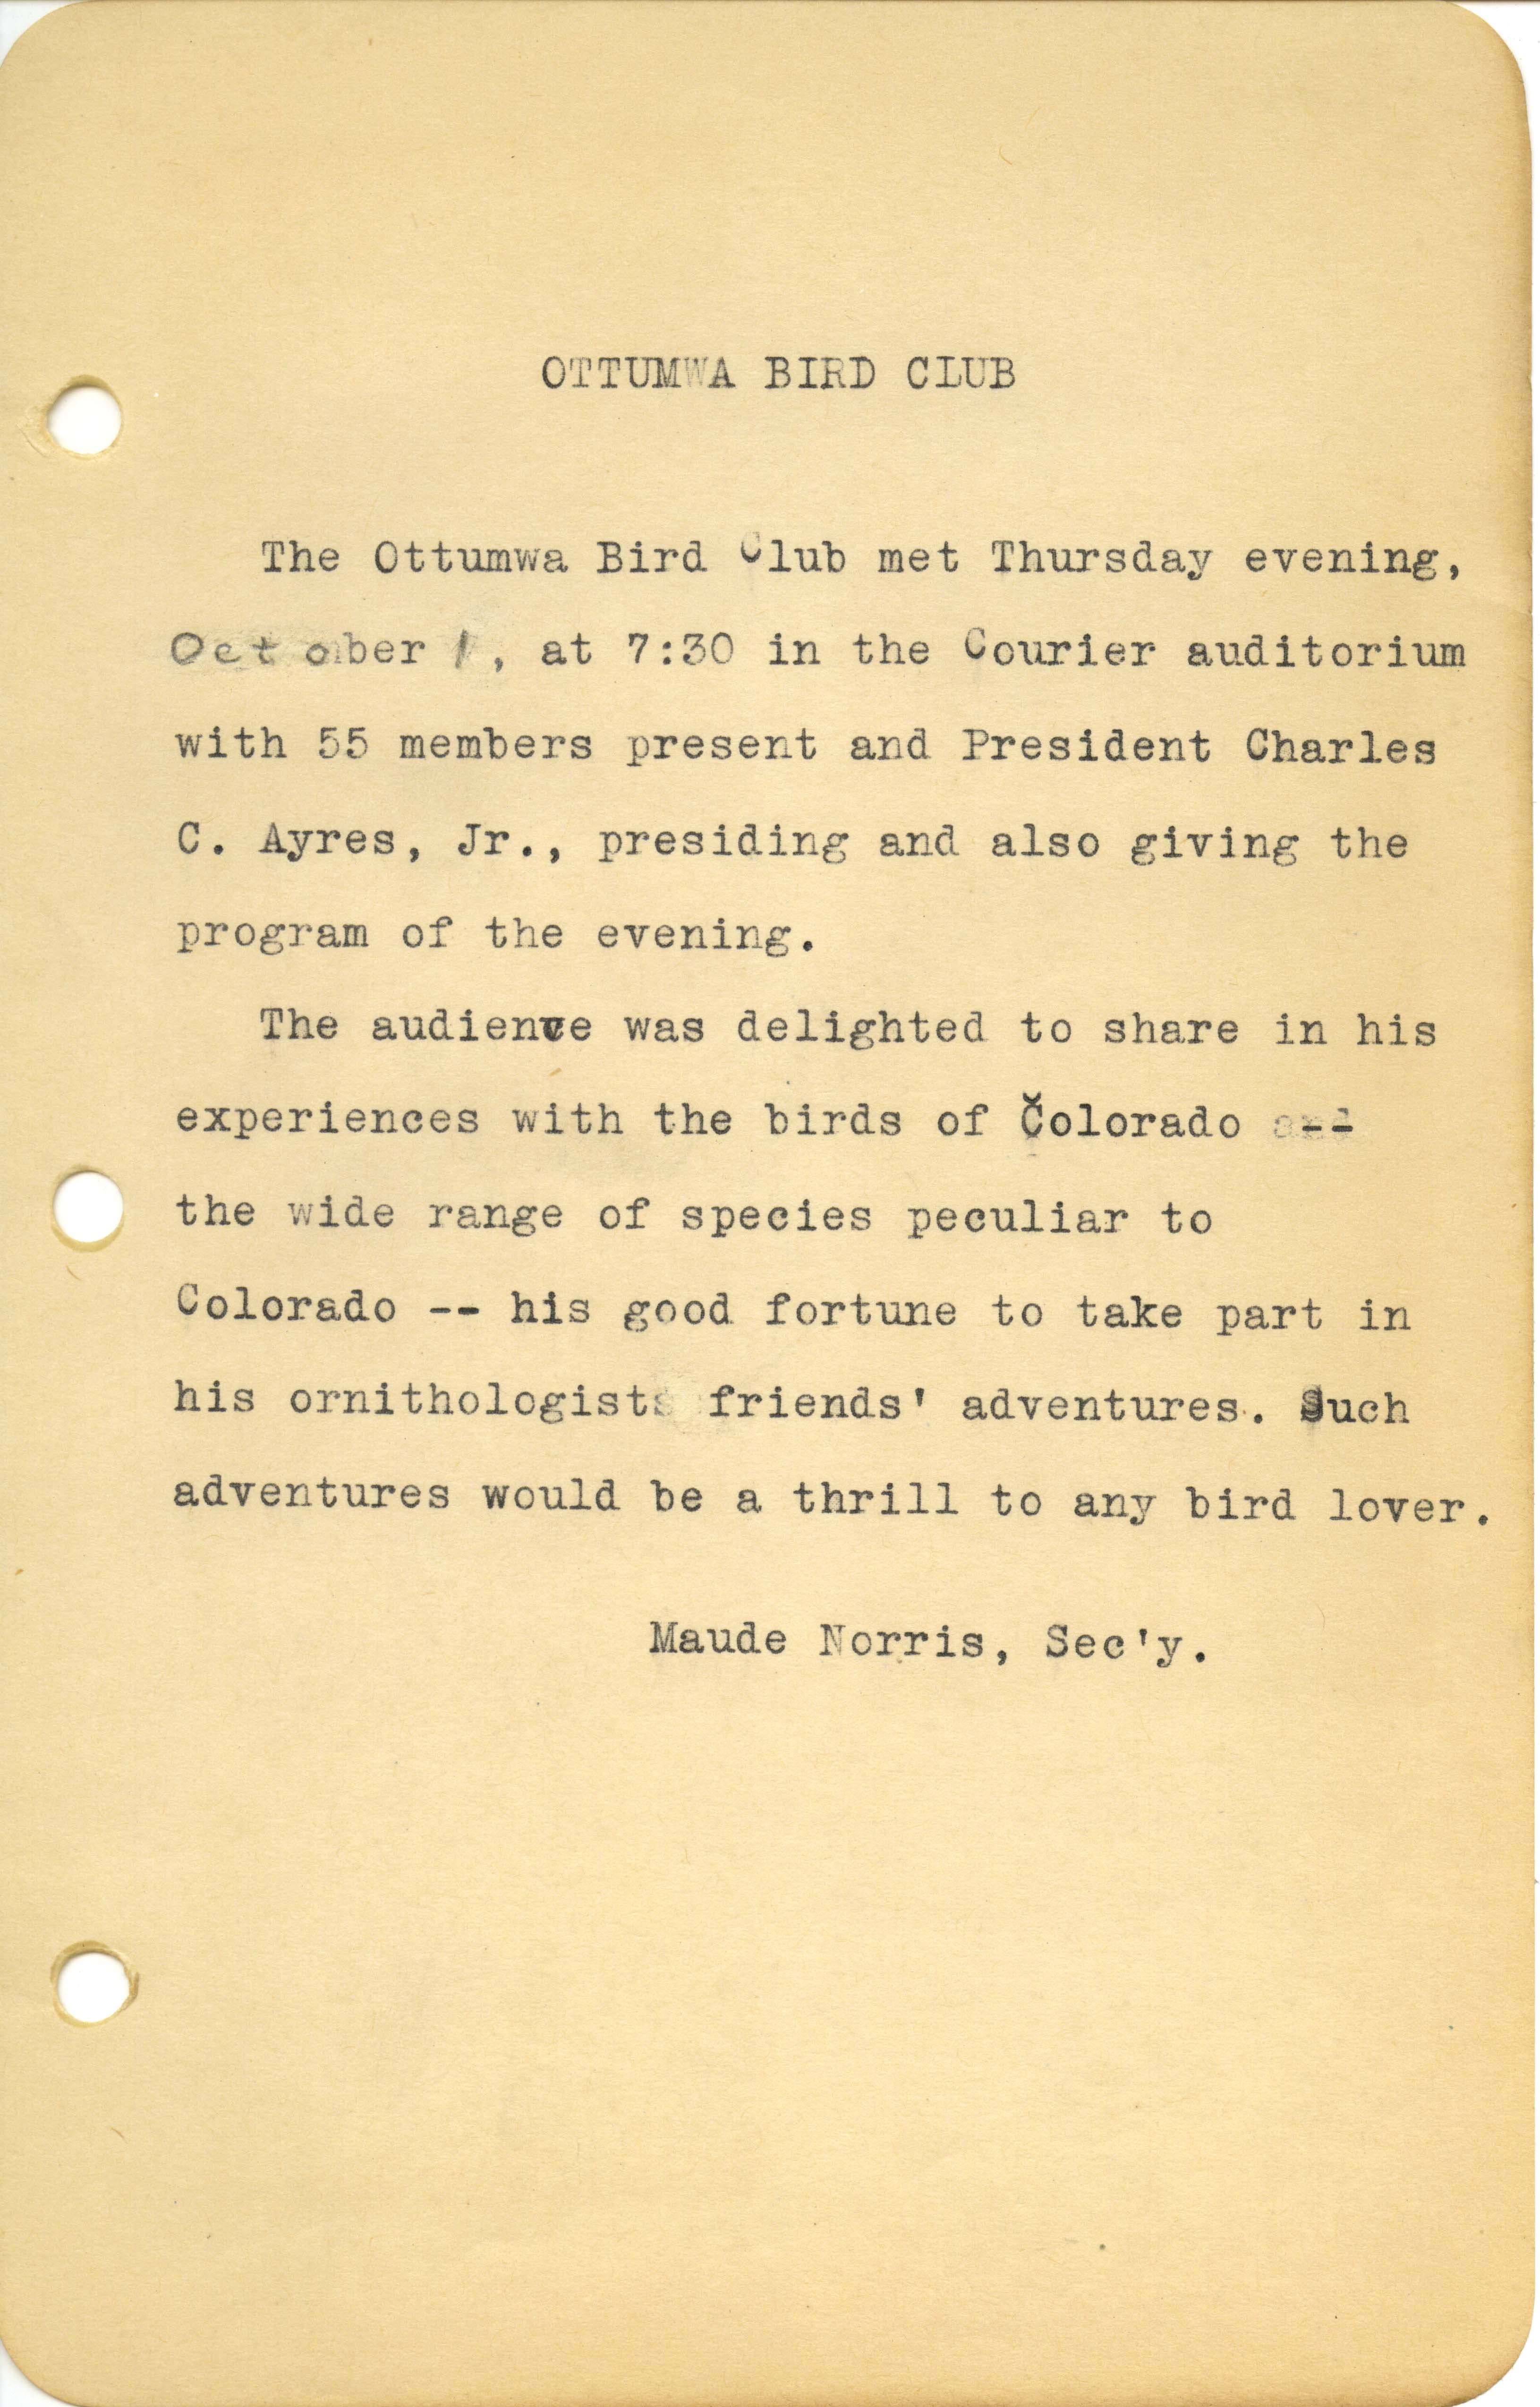  Ottumwa Bird Club meeting minutes, October 1, 1944